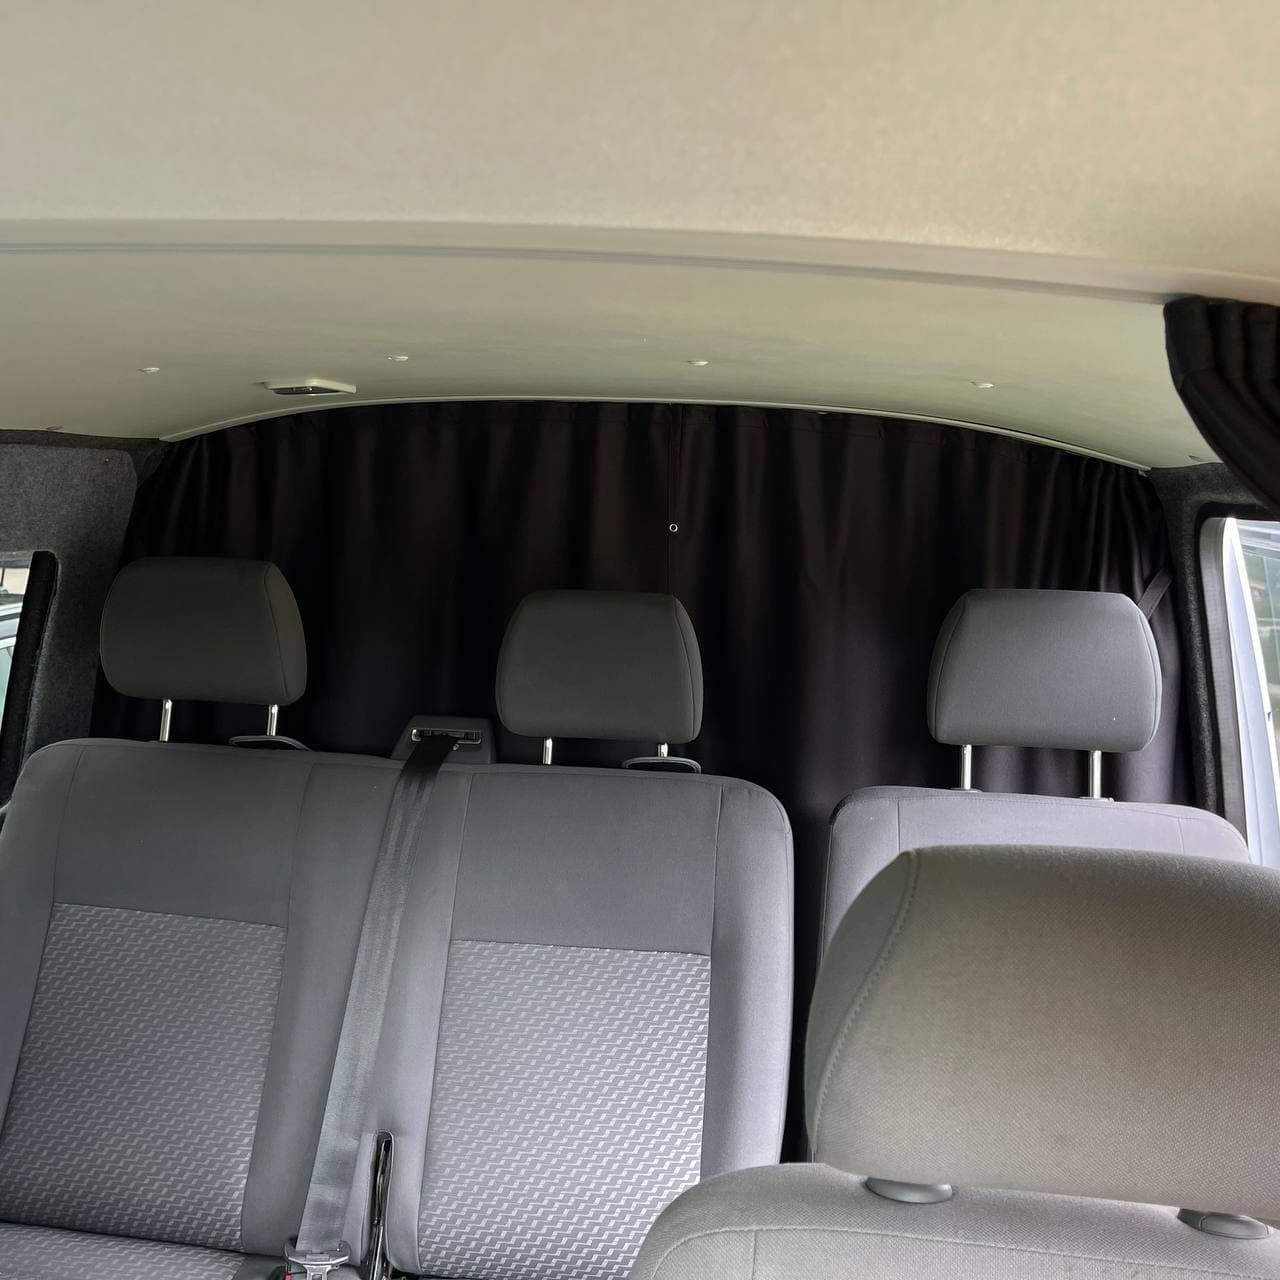 VW T5 Cab Divider Curtain Kit – VAN-X GmbH